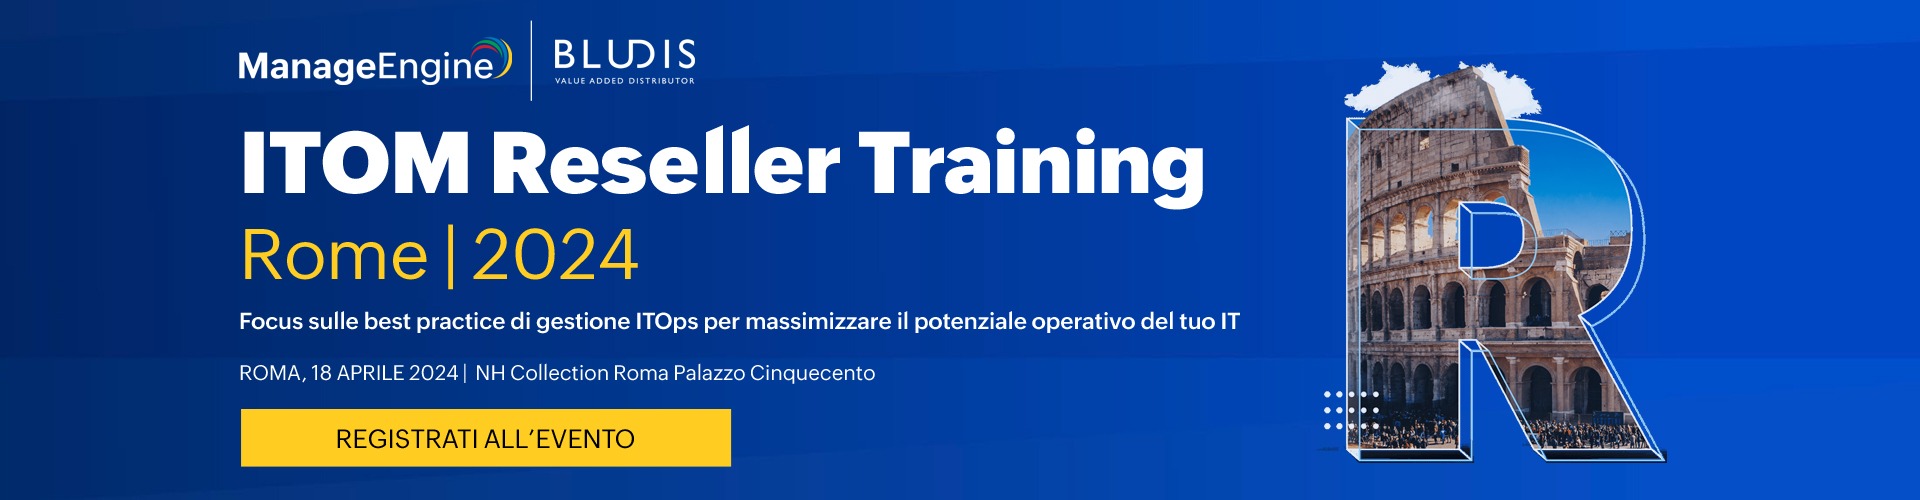 ITOM Reseller Training | Bludis | ManageEngine